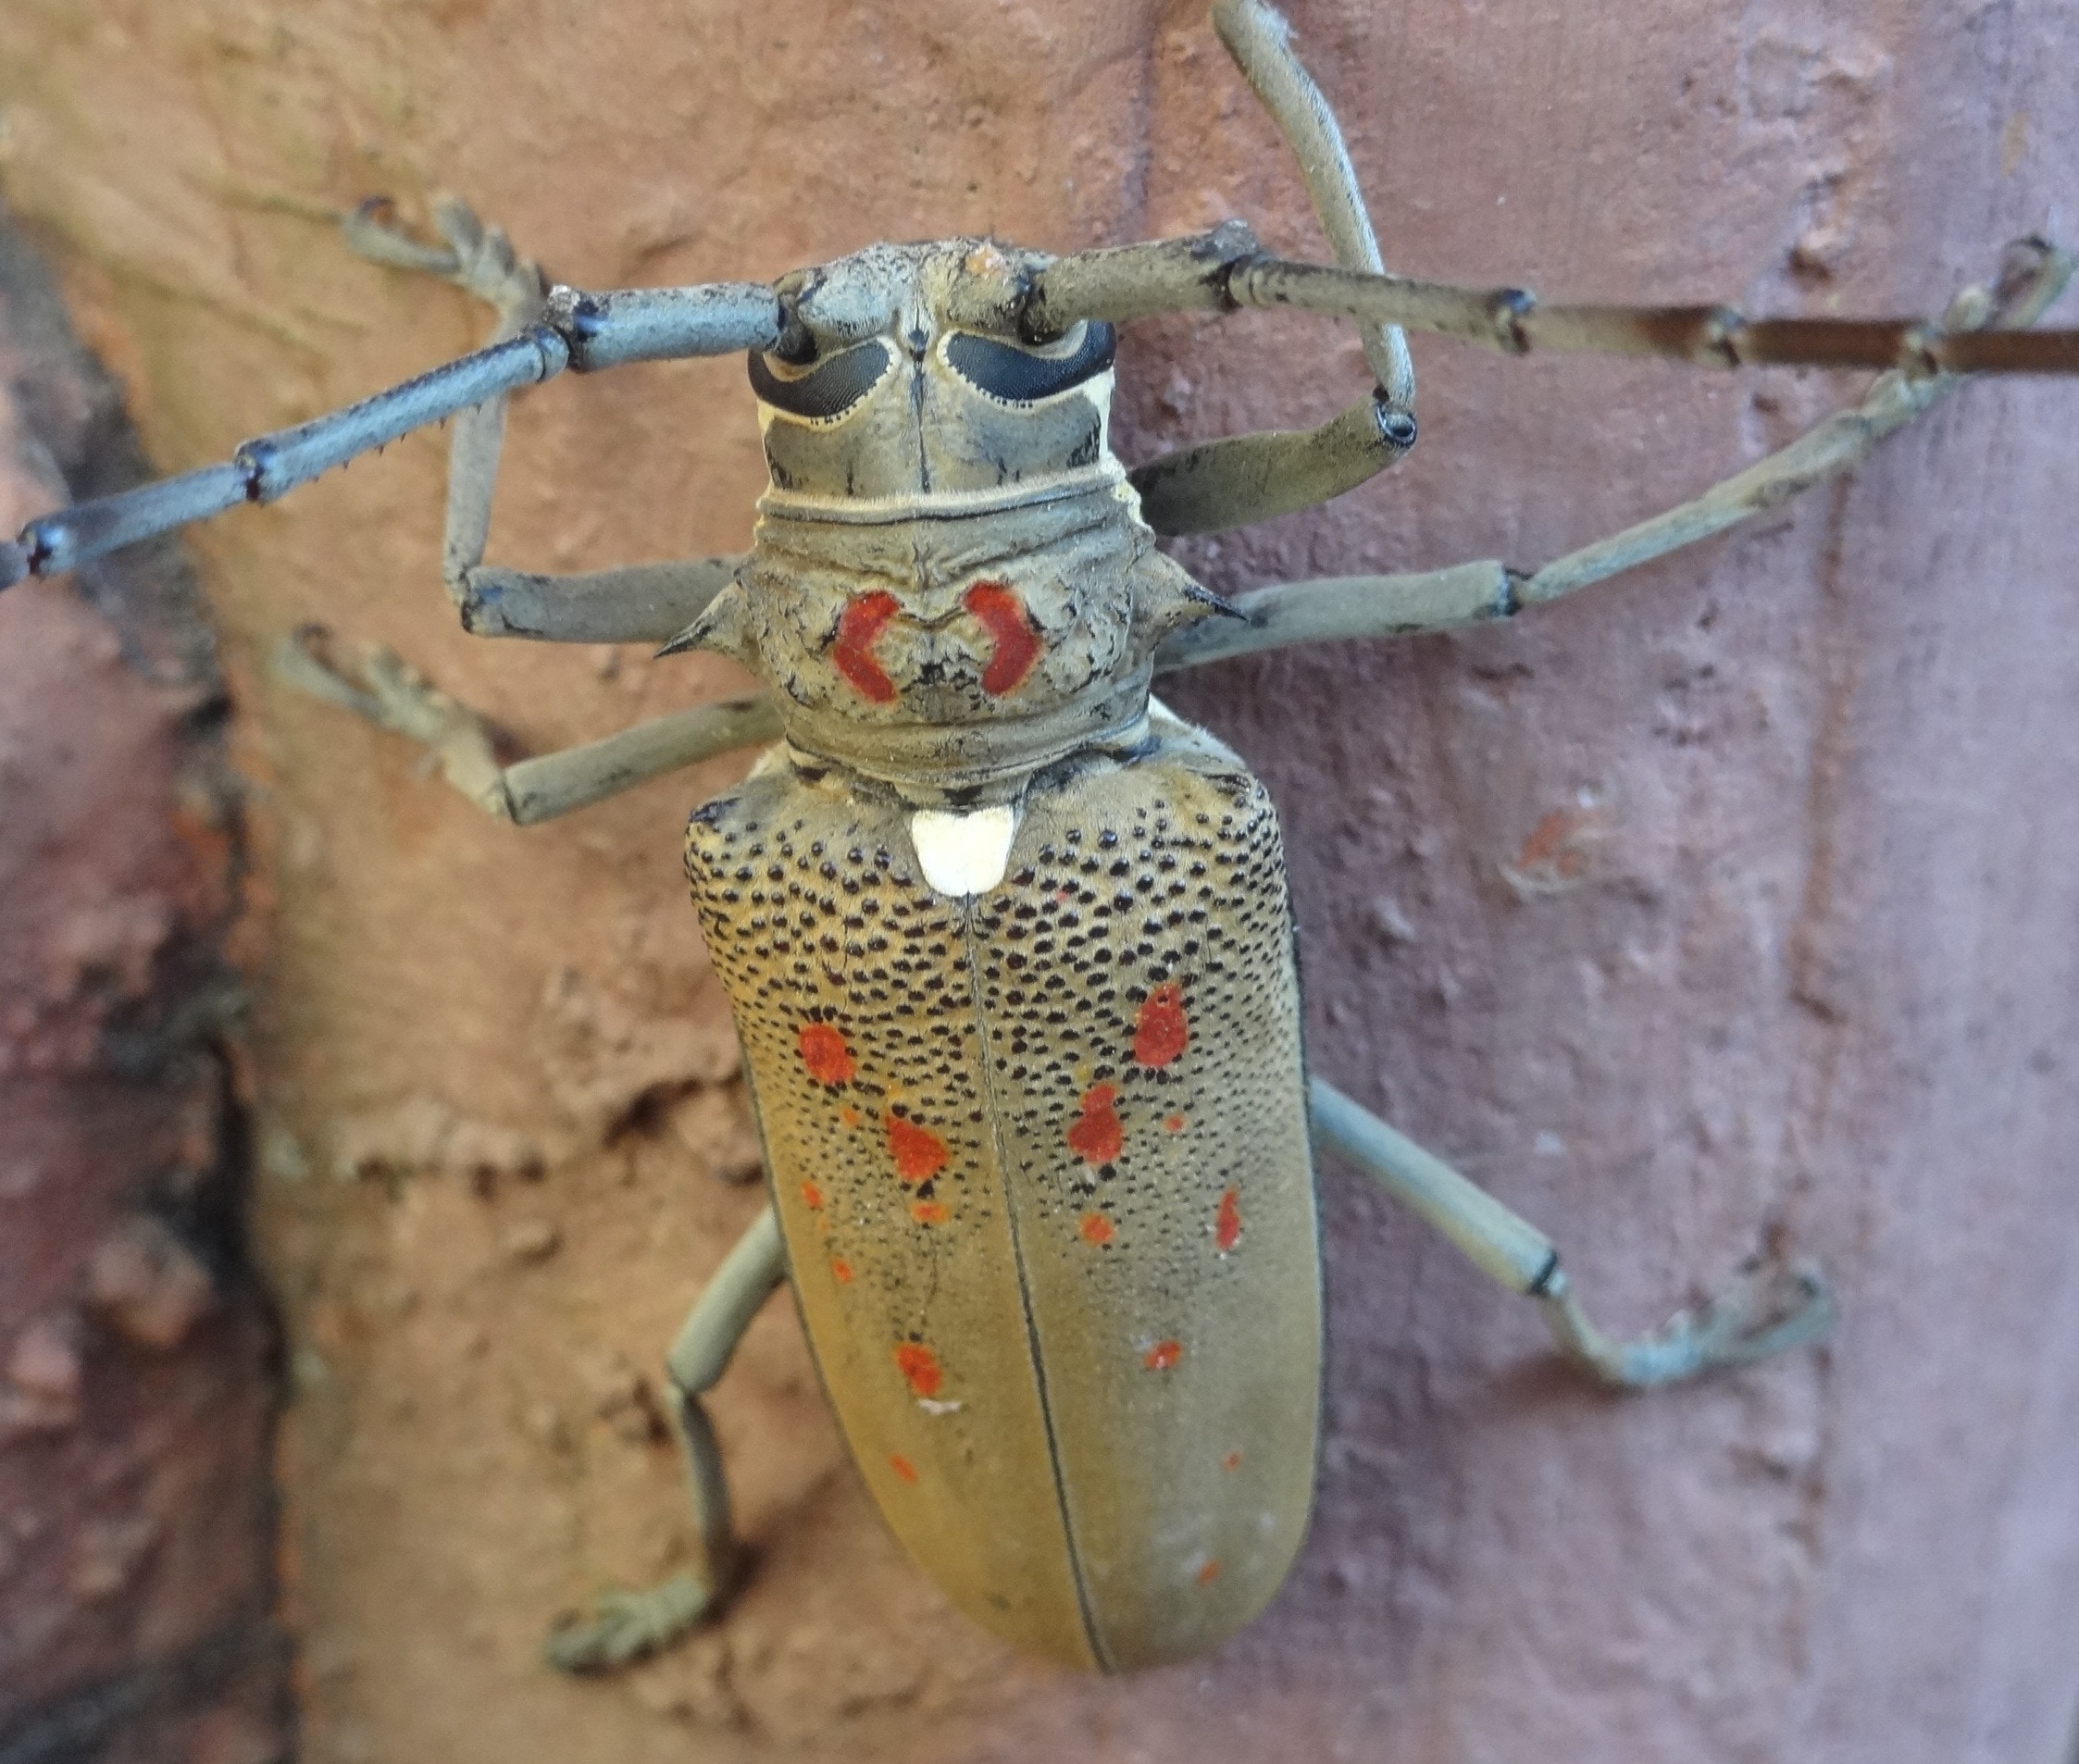 brown and orange beetle on brown surface